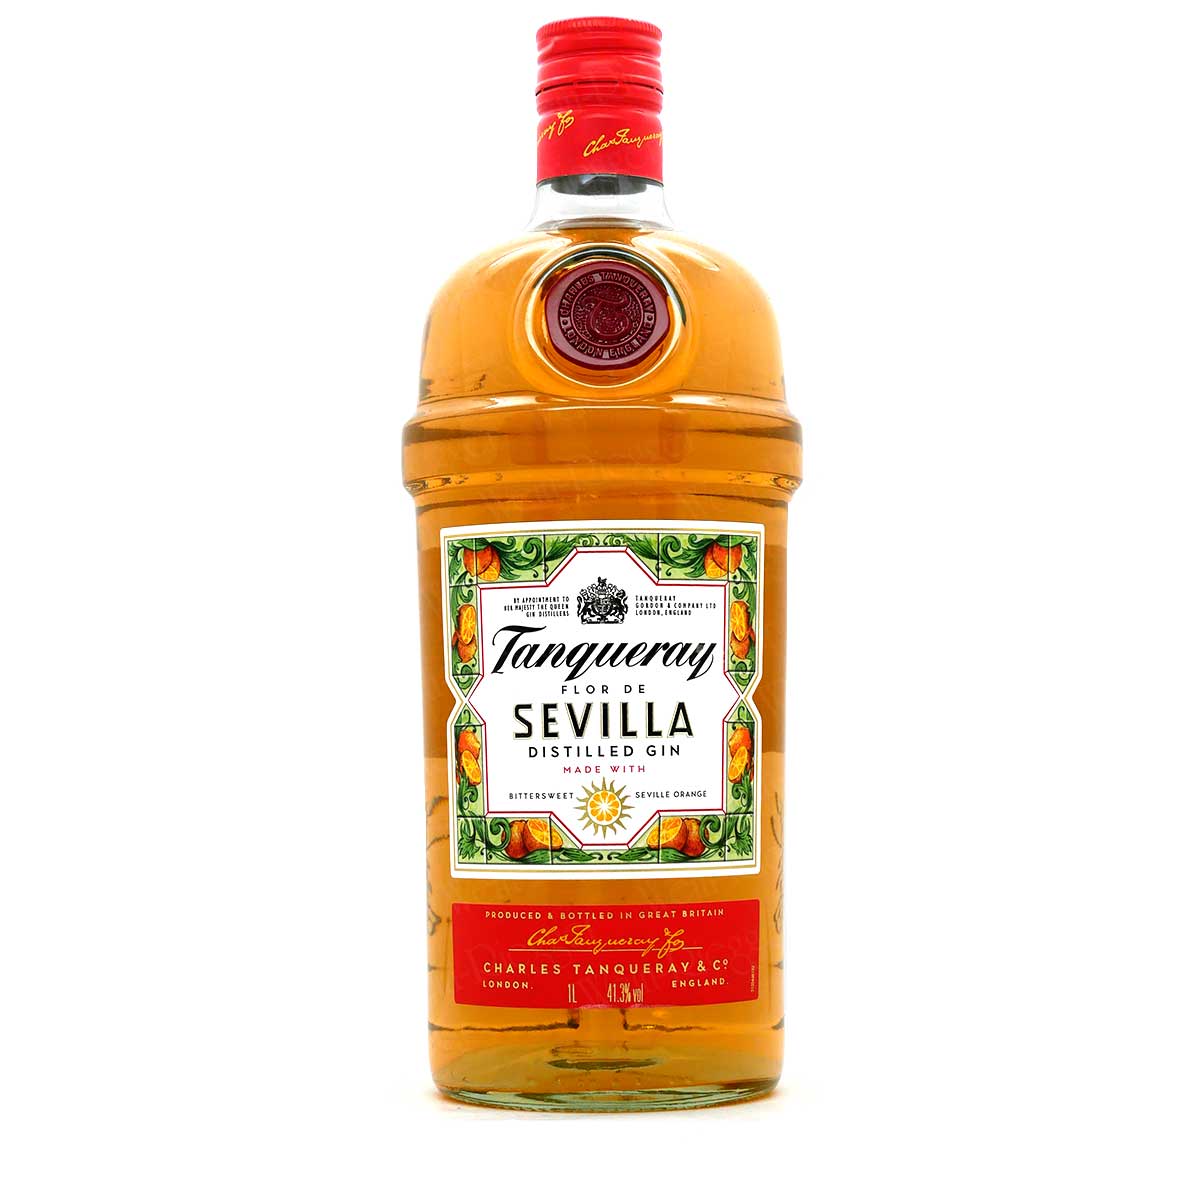 Tanqueray | Flor de Sevilla Distilled Gin | 1 Liter